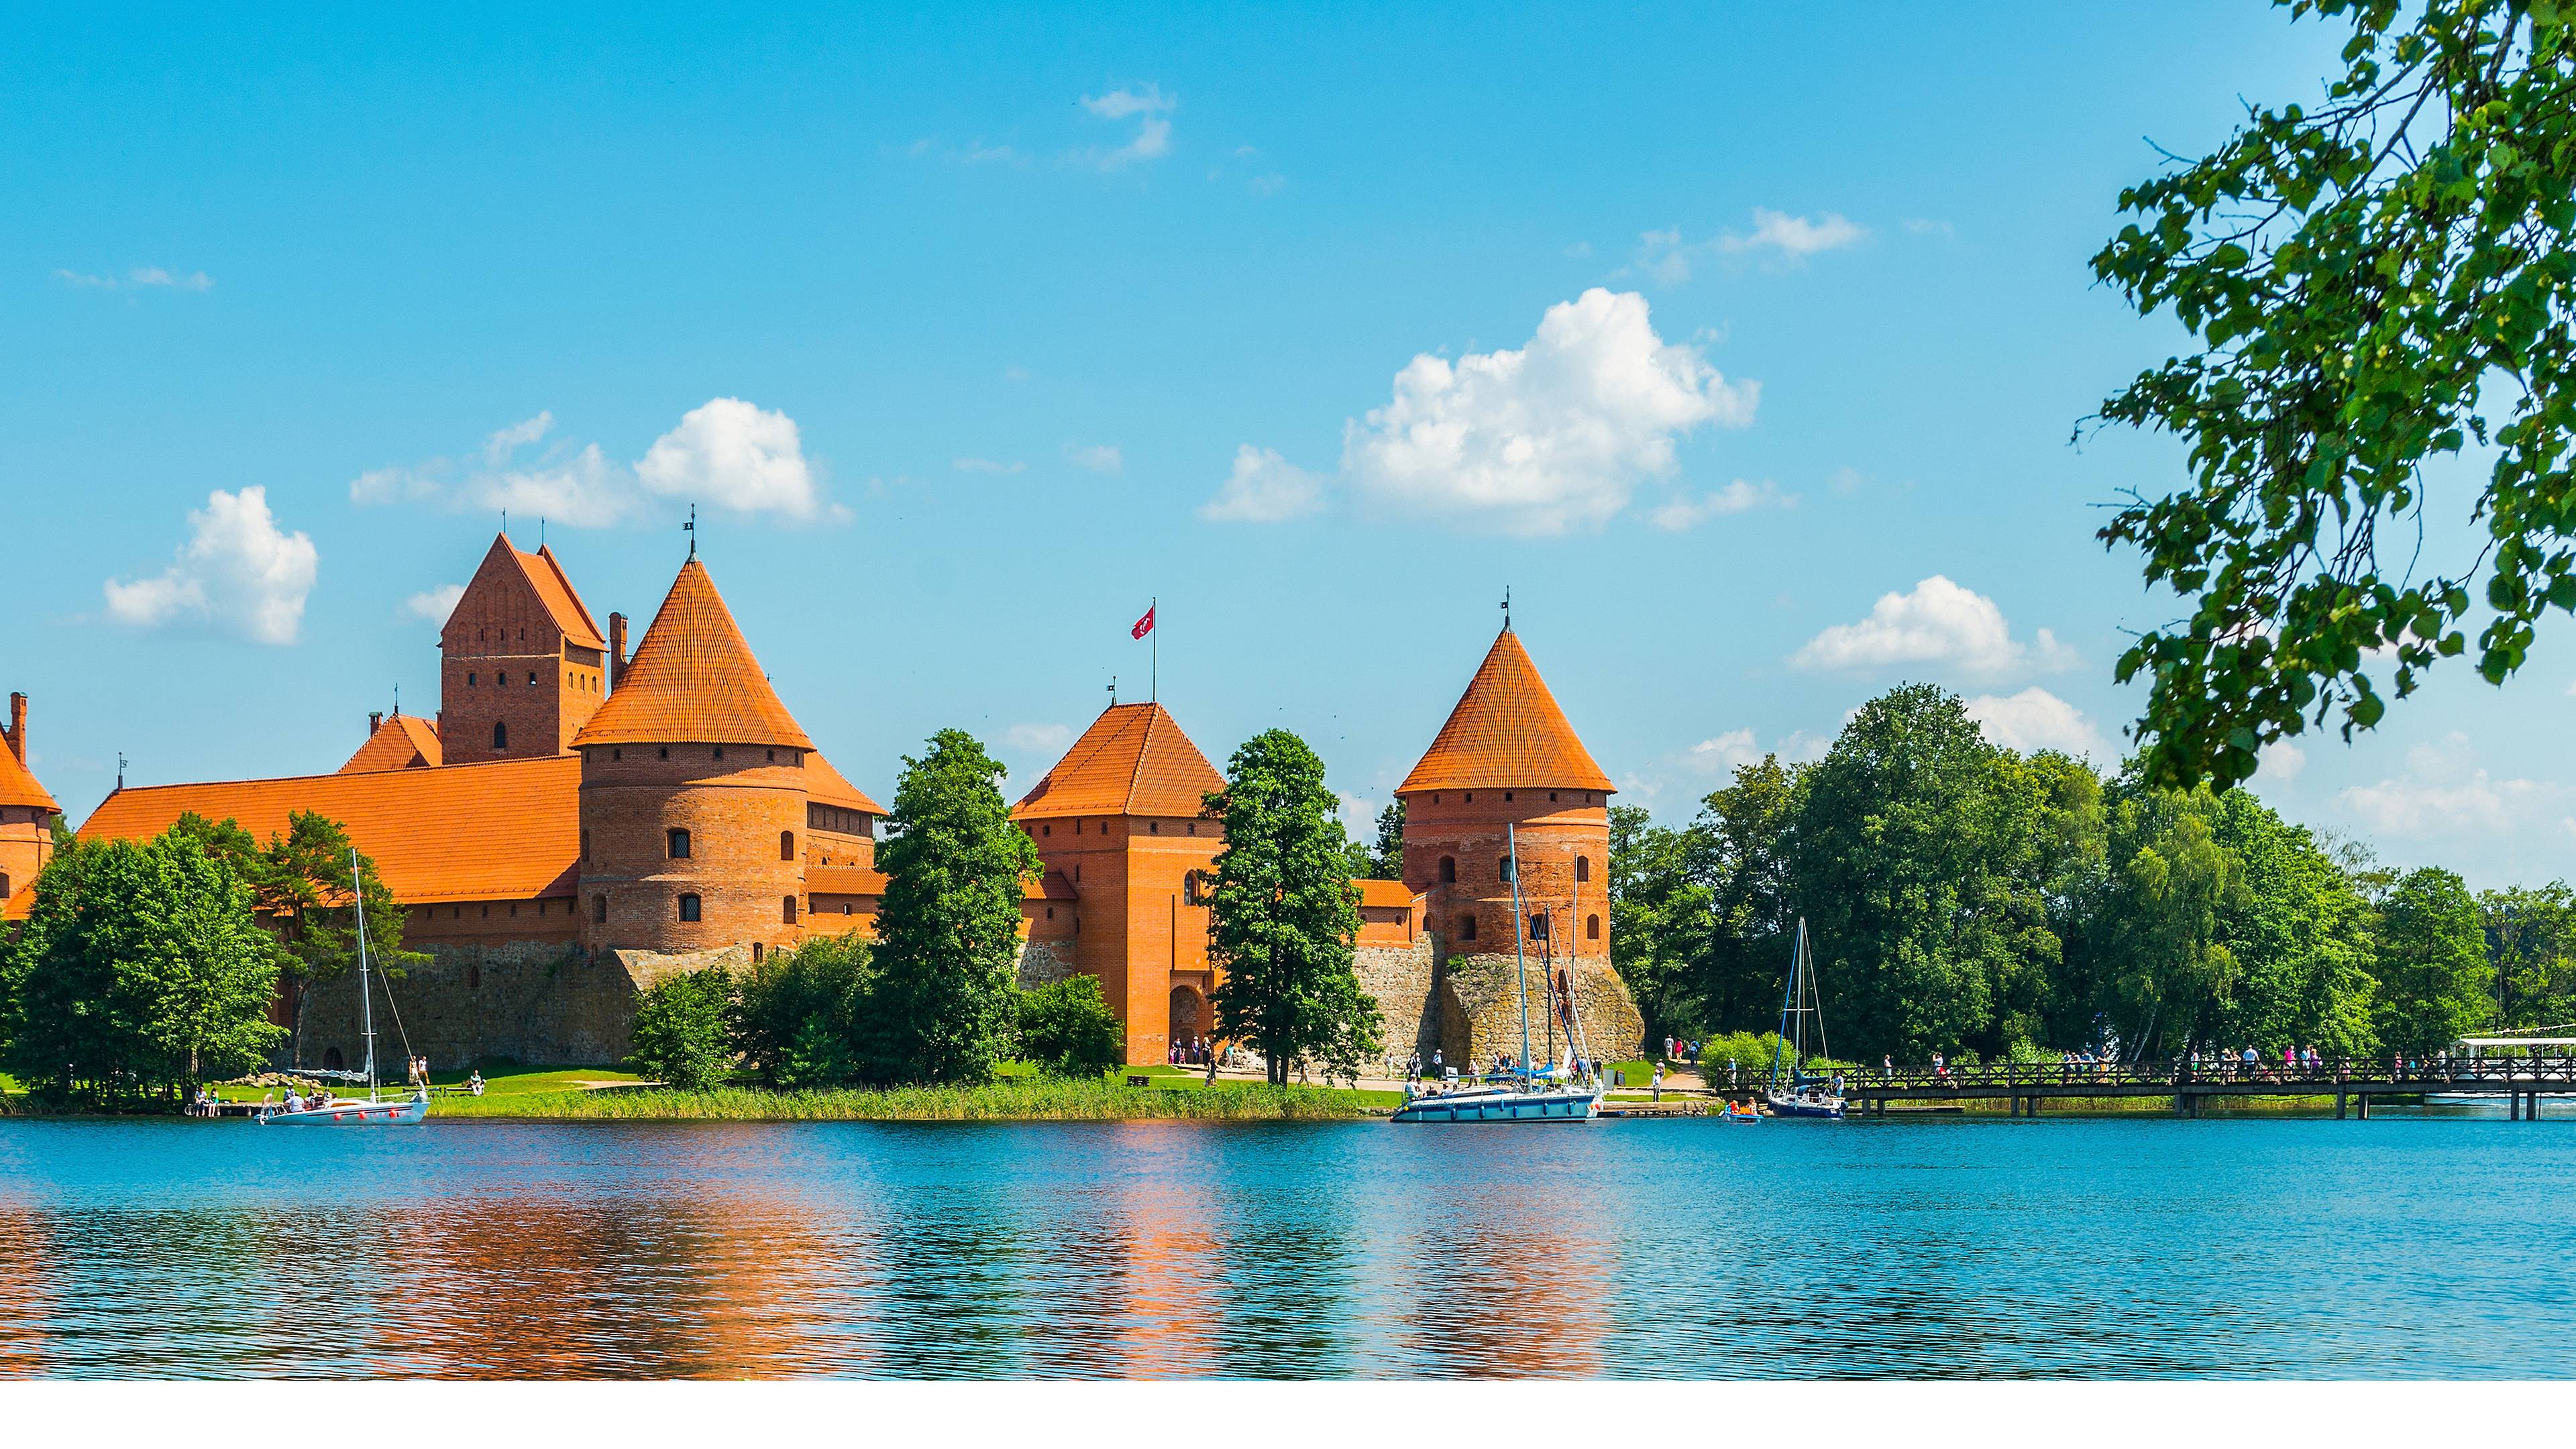 Le château de Trakai en Lituanie